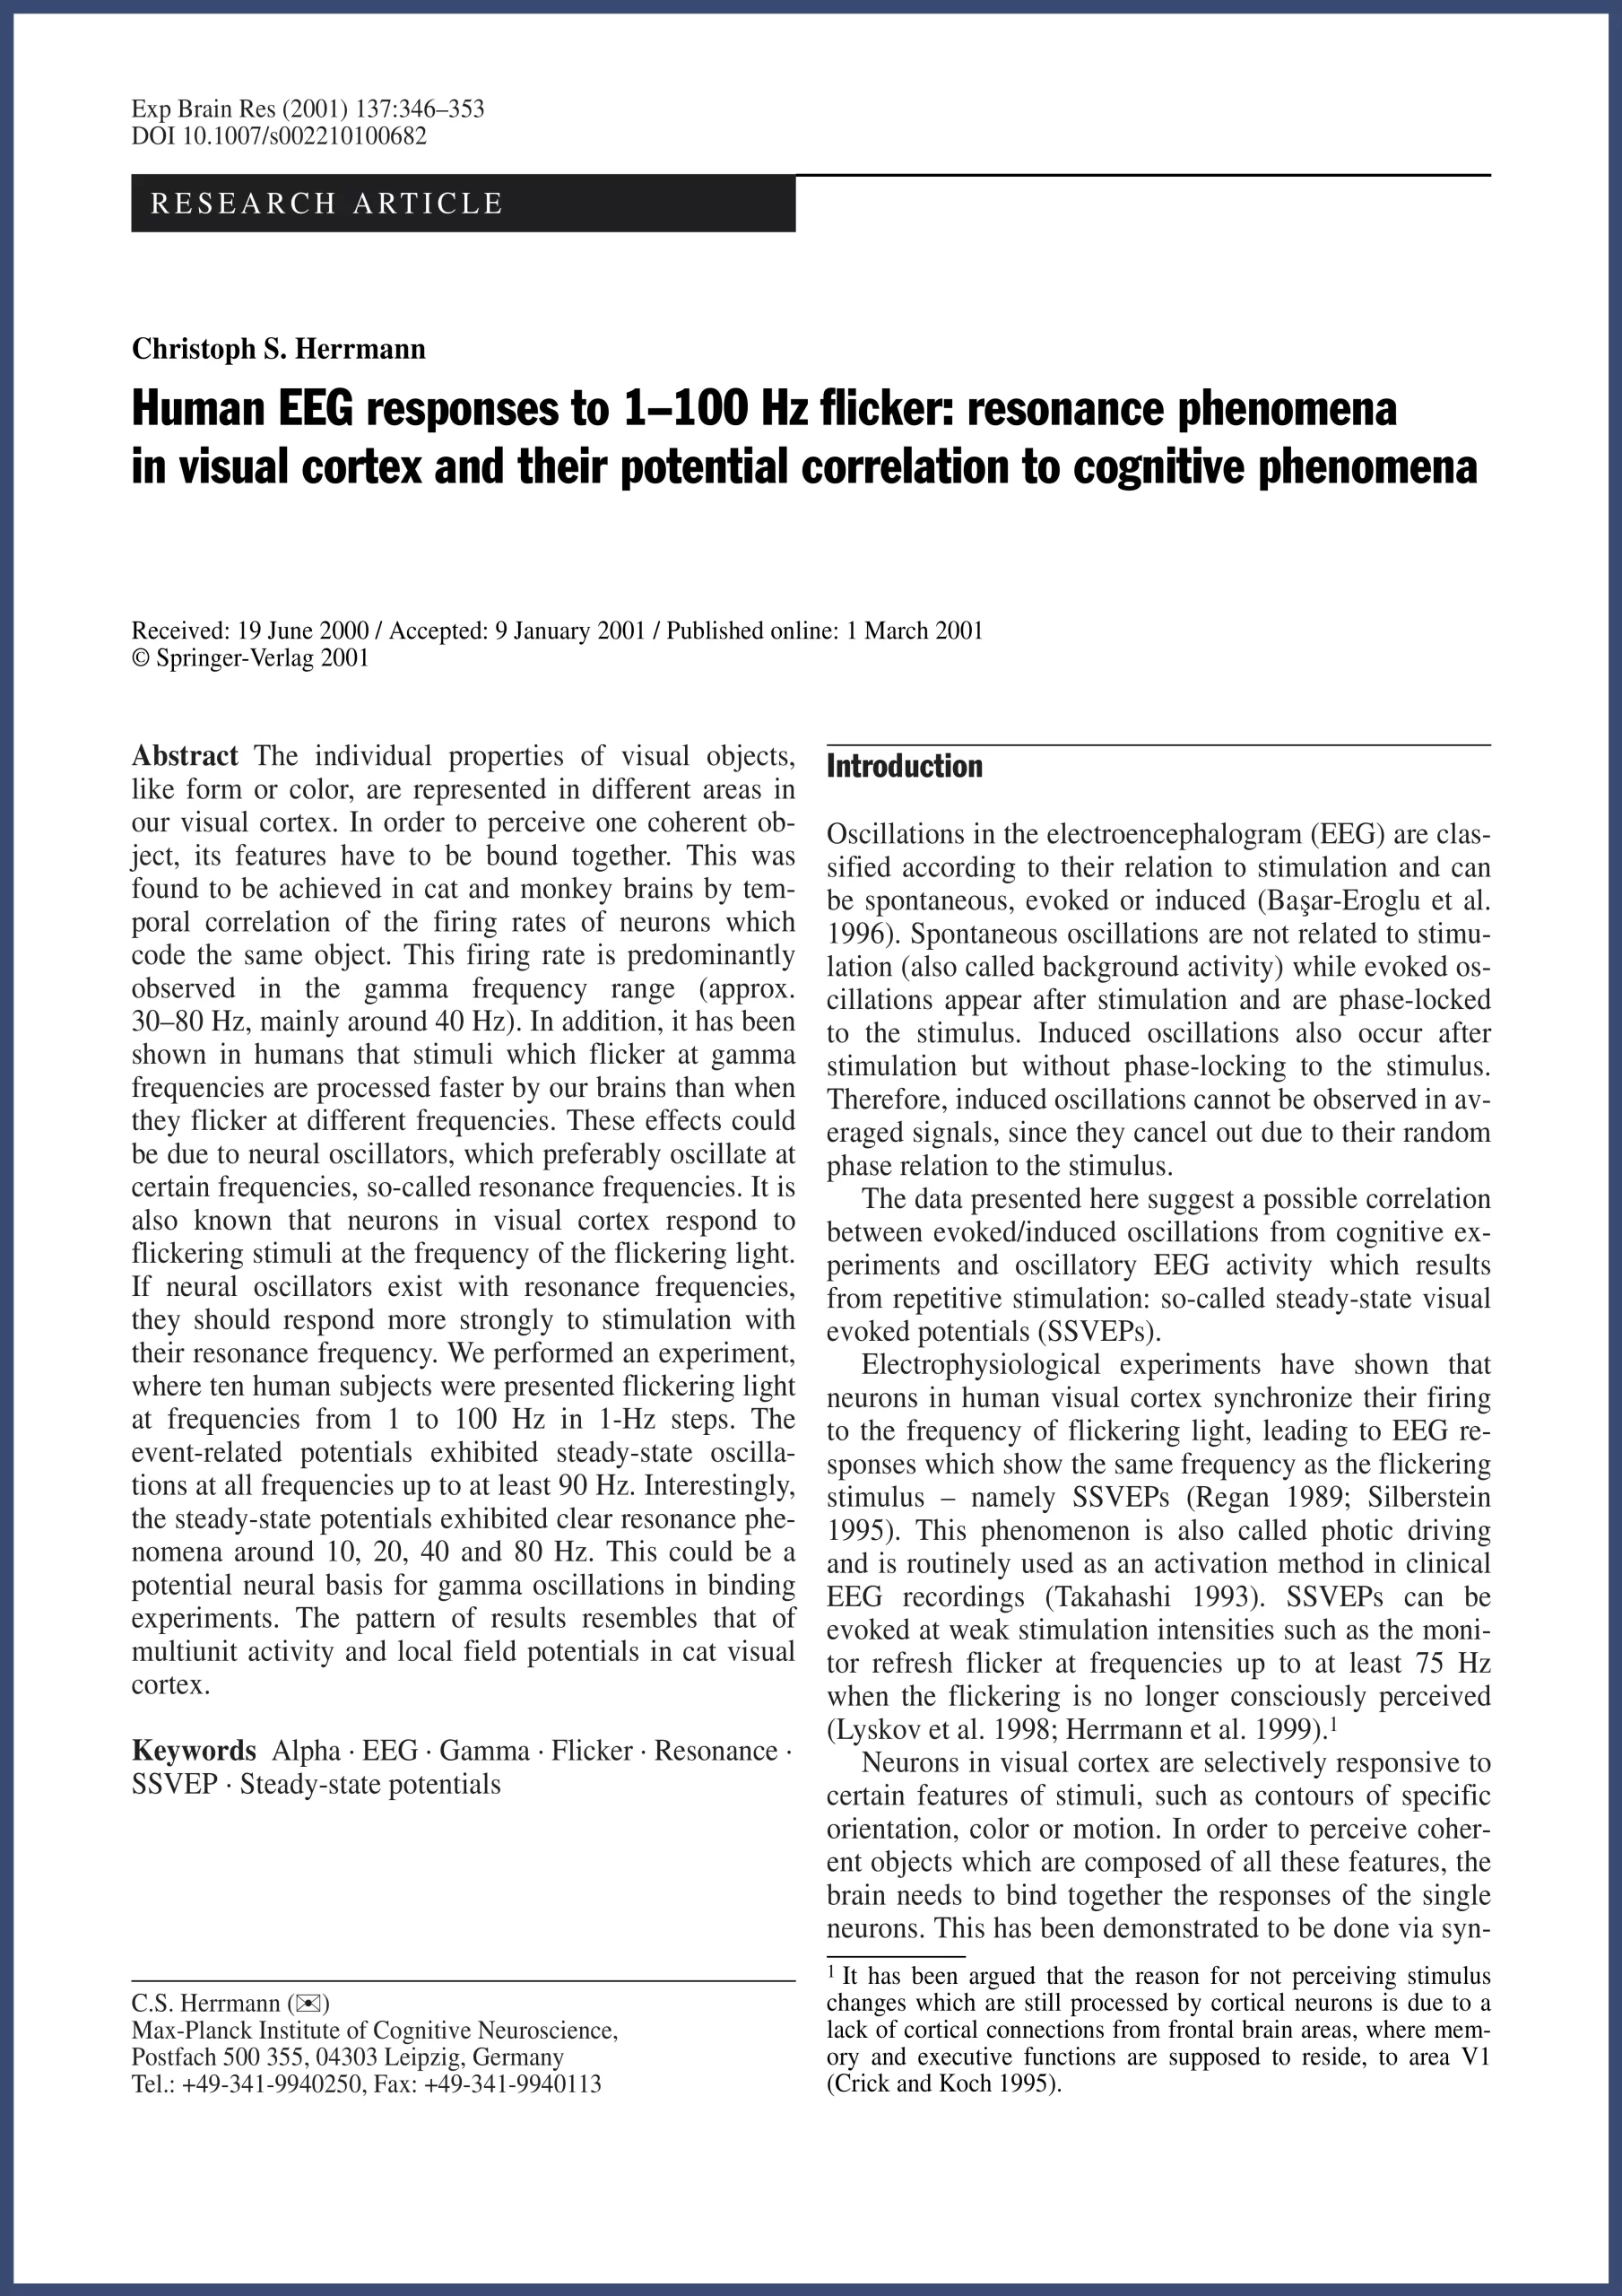 Human EEG responses to 1-100 Hz flicker: resonance phenomena in visual cortex and their potential correlation to cognitive phenomena publication